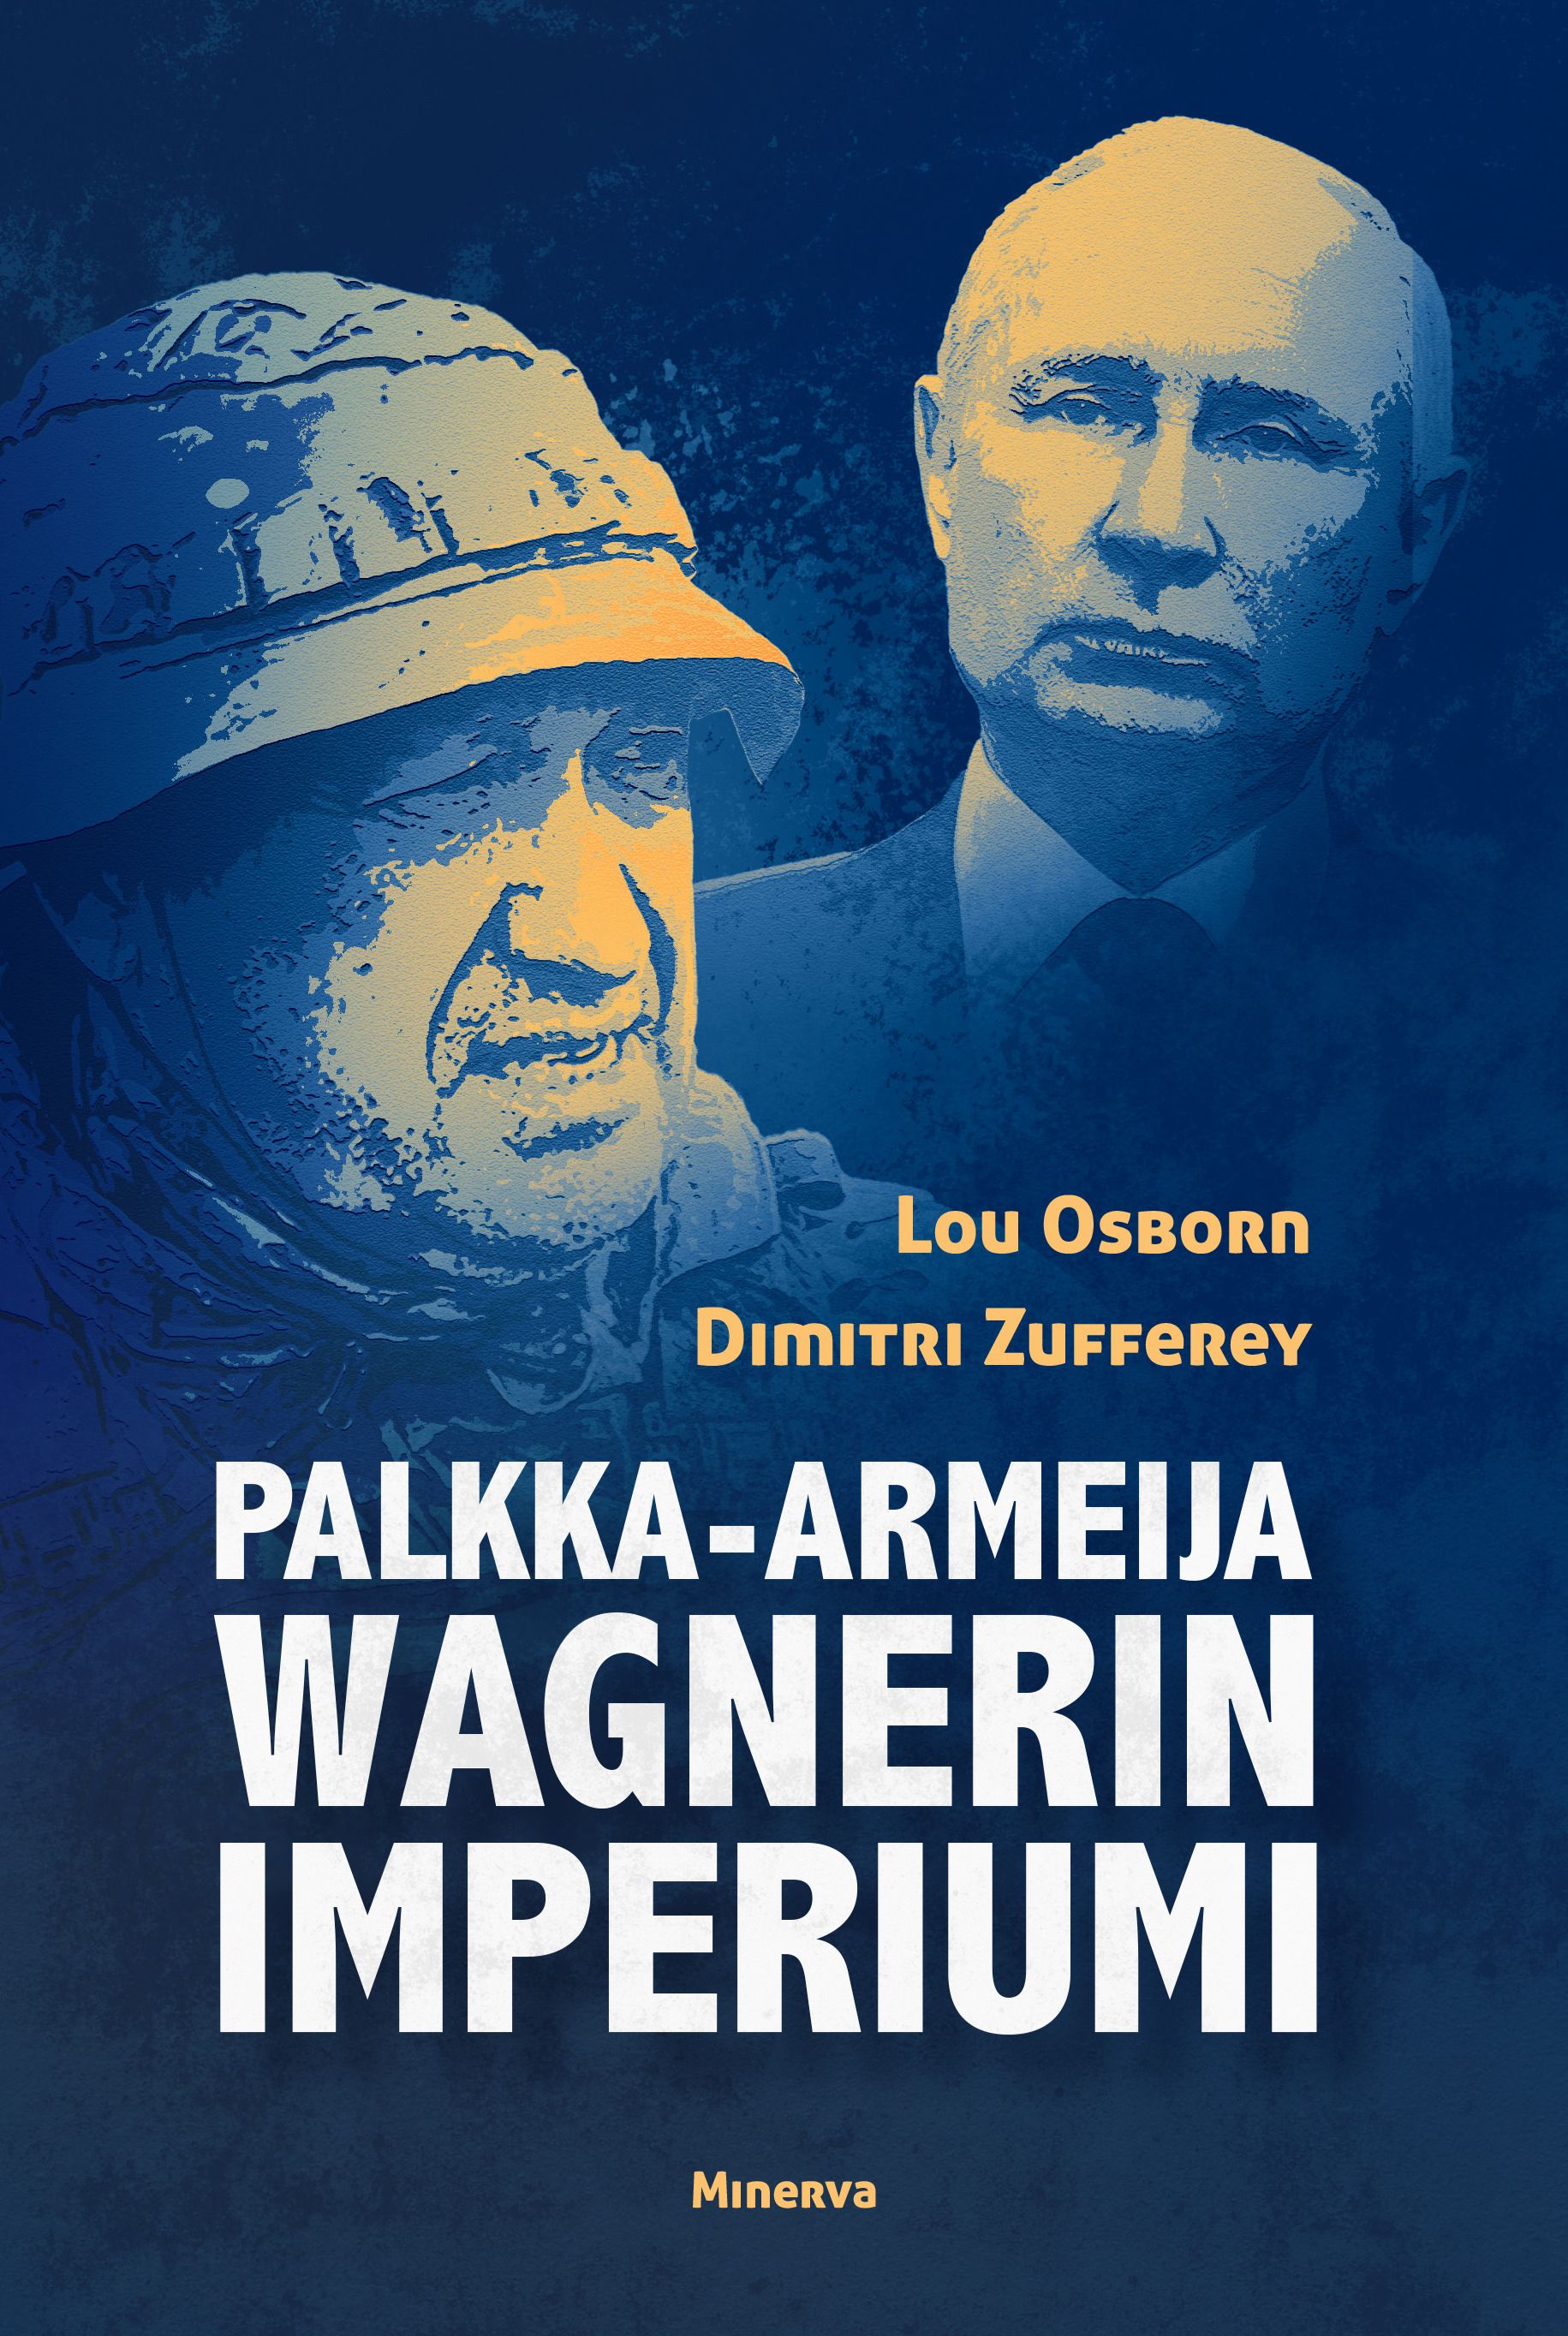 Lou Osborn & Dimitri Zufferey : Palkka-armeija Wagnerin imperiumi